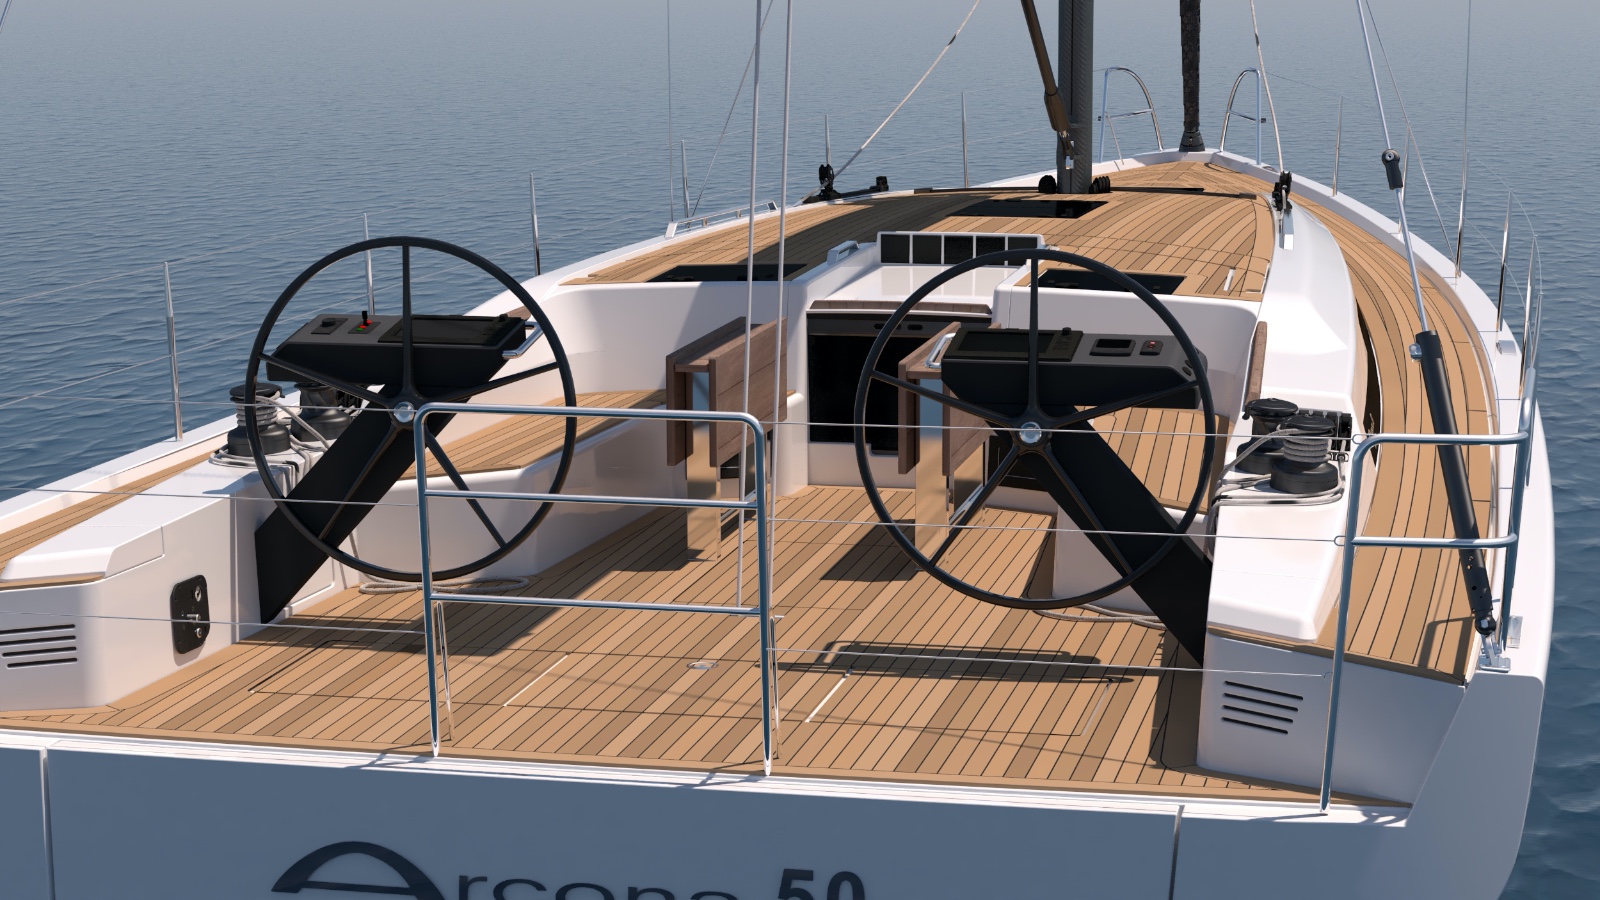 yachting world arcona 50